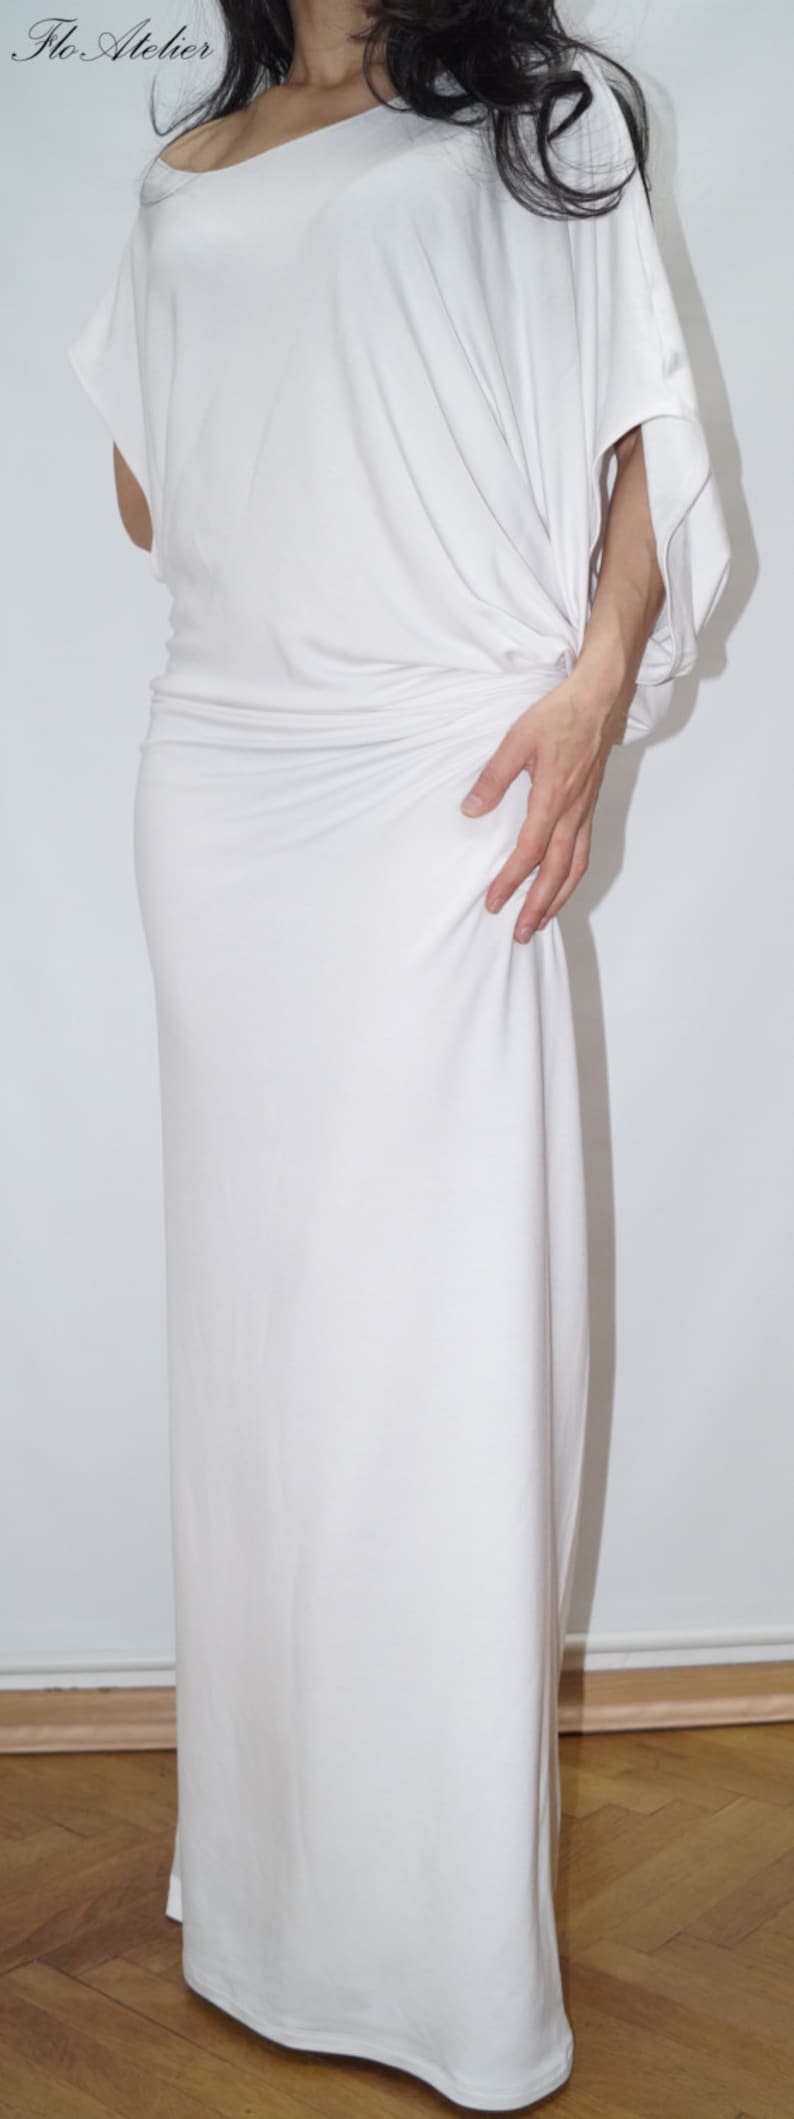 Maxi Dress/Asymmetrical Maxi Tunic/Handmade White Kaftan/White Summer Dress/Top/Cotton Dress/White Tunic/White Dress/White Casual Top/F1114 image 5